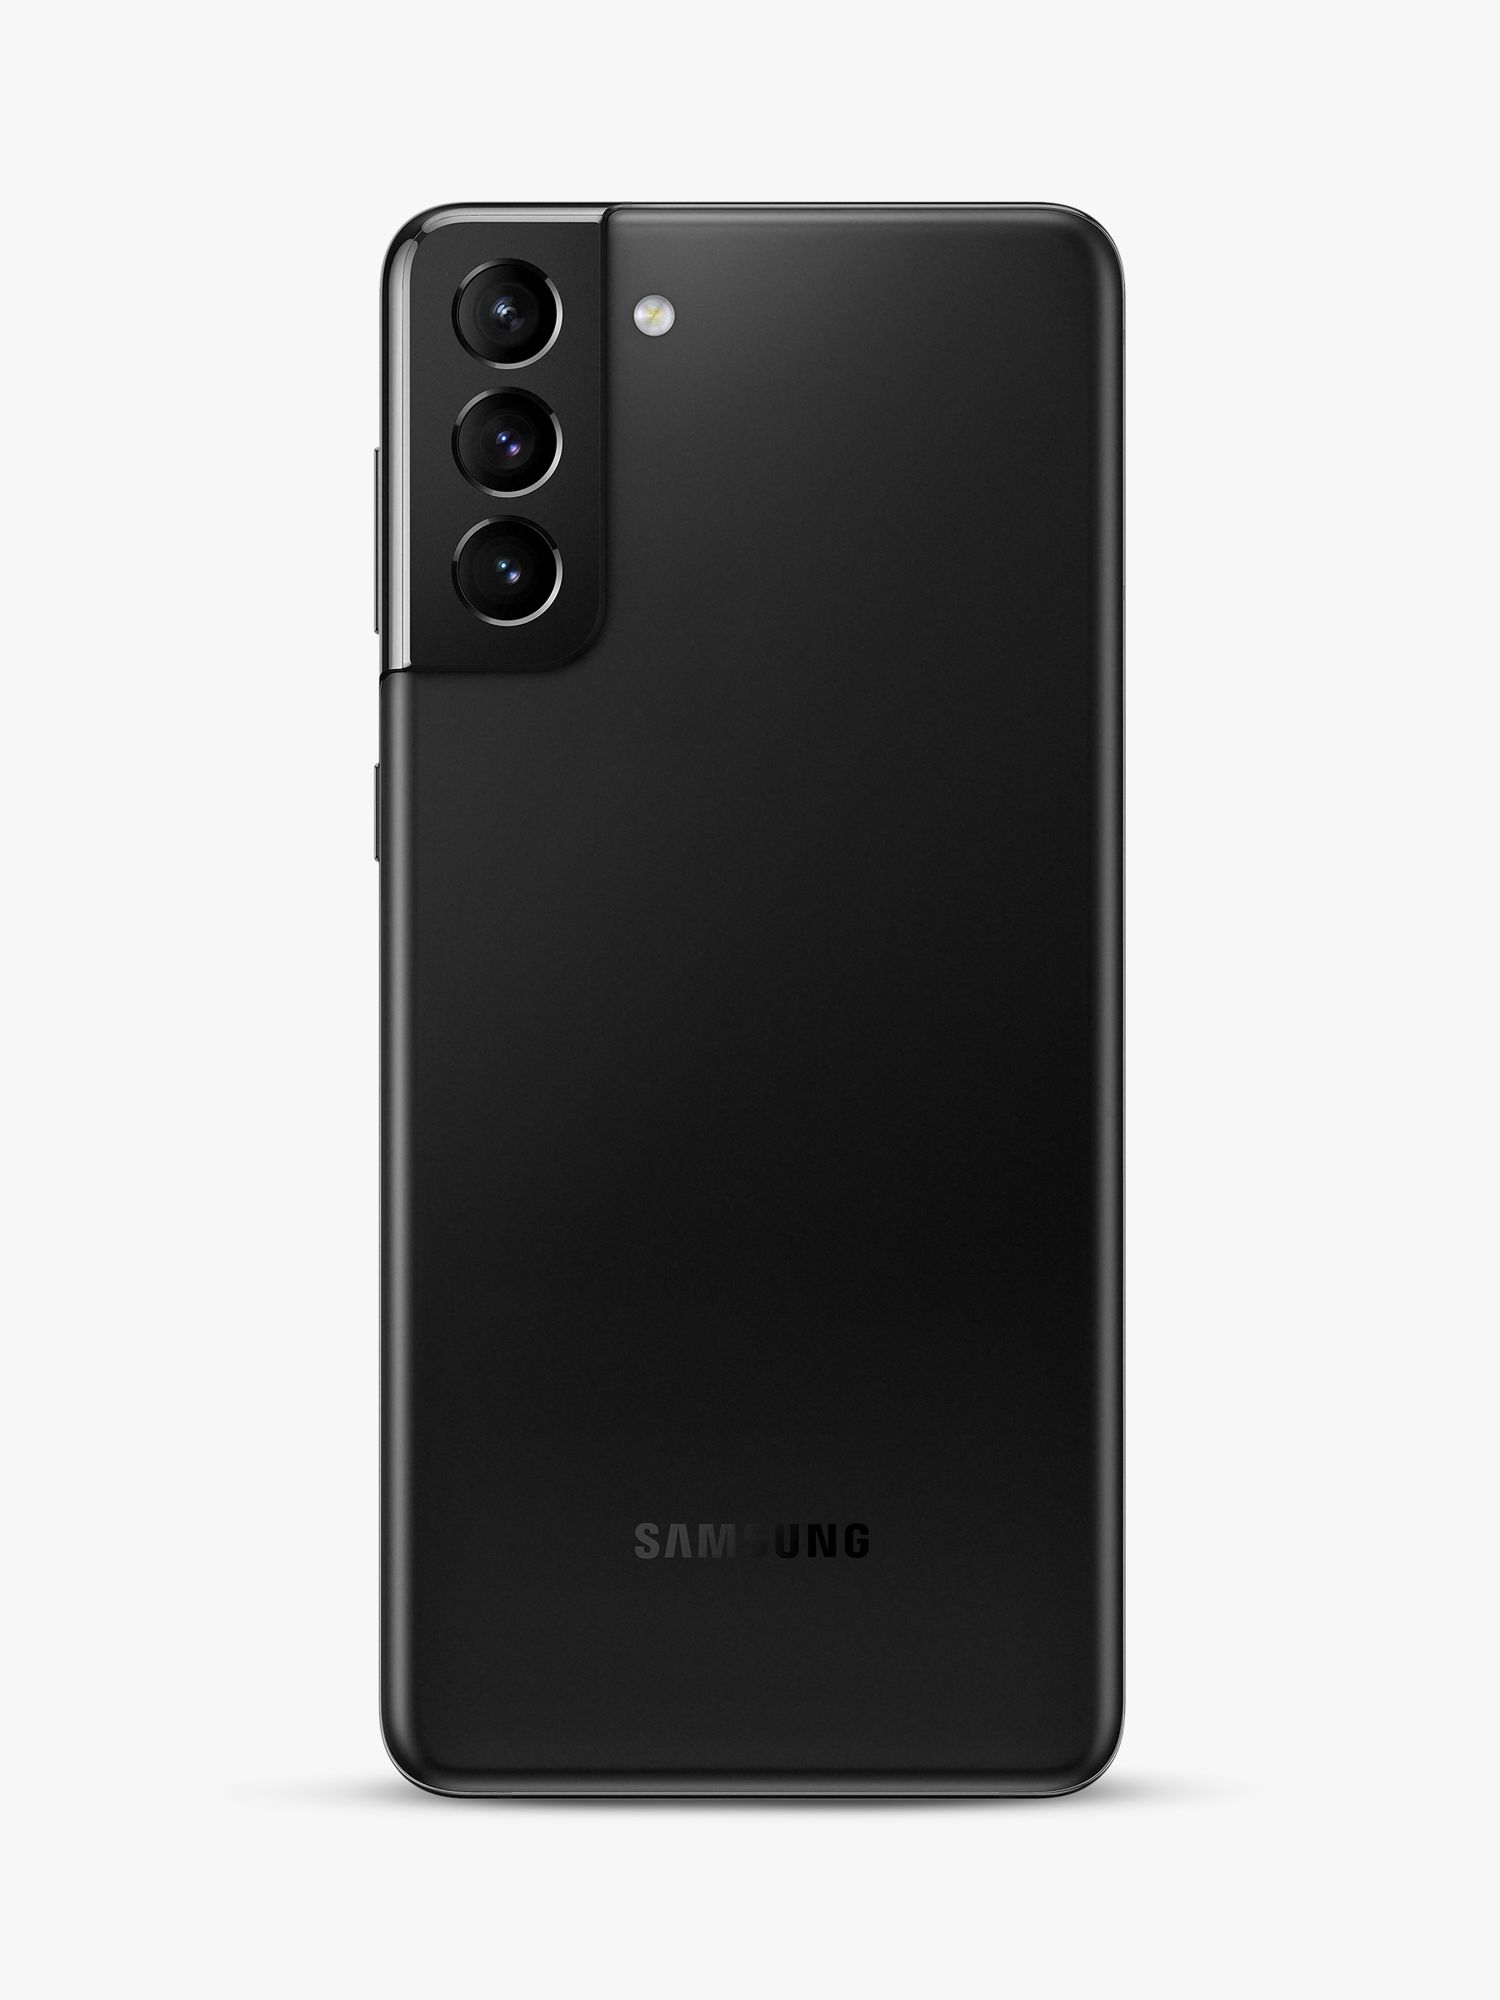 Samsung Galaxy S21 Plus 5g Smartphone With Wireless Powershare 8gb Ram 6 7 5g Sim Free 256gb